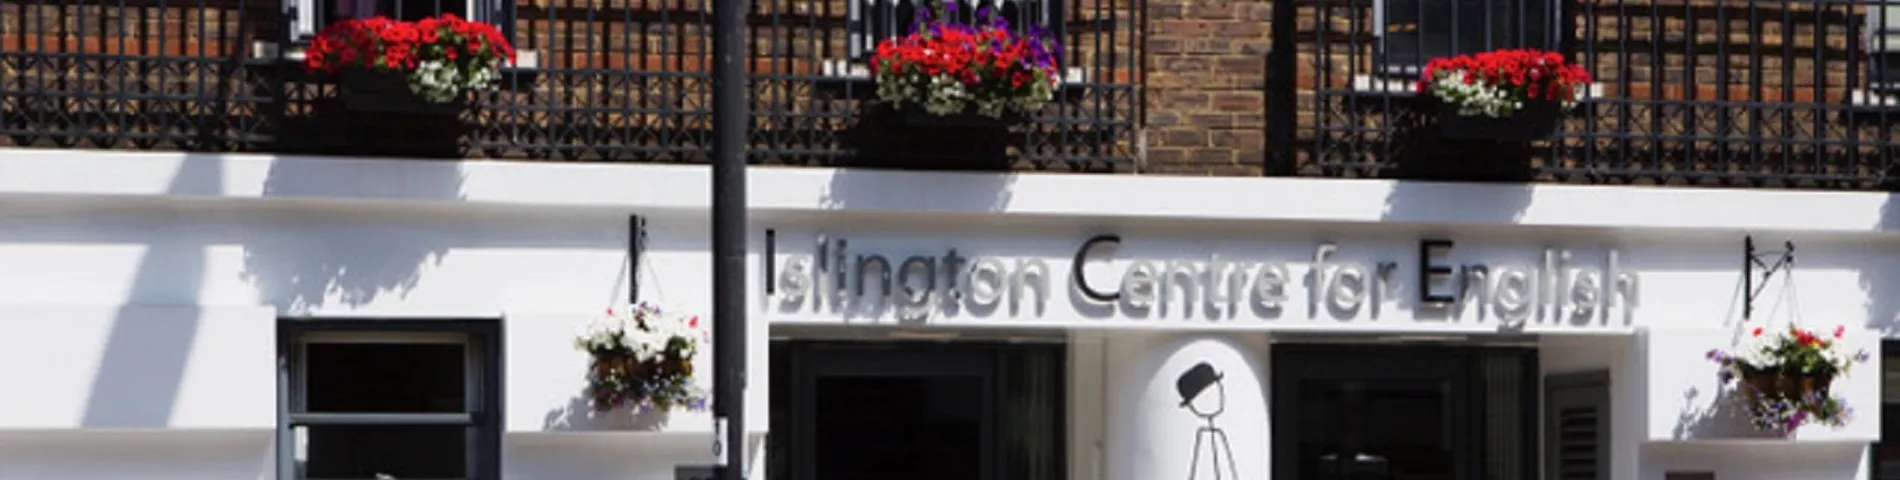 Islington Centre for English picture 1